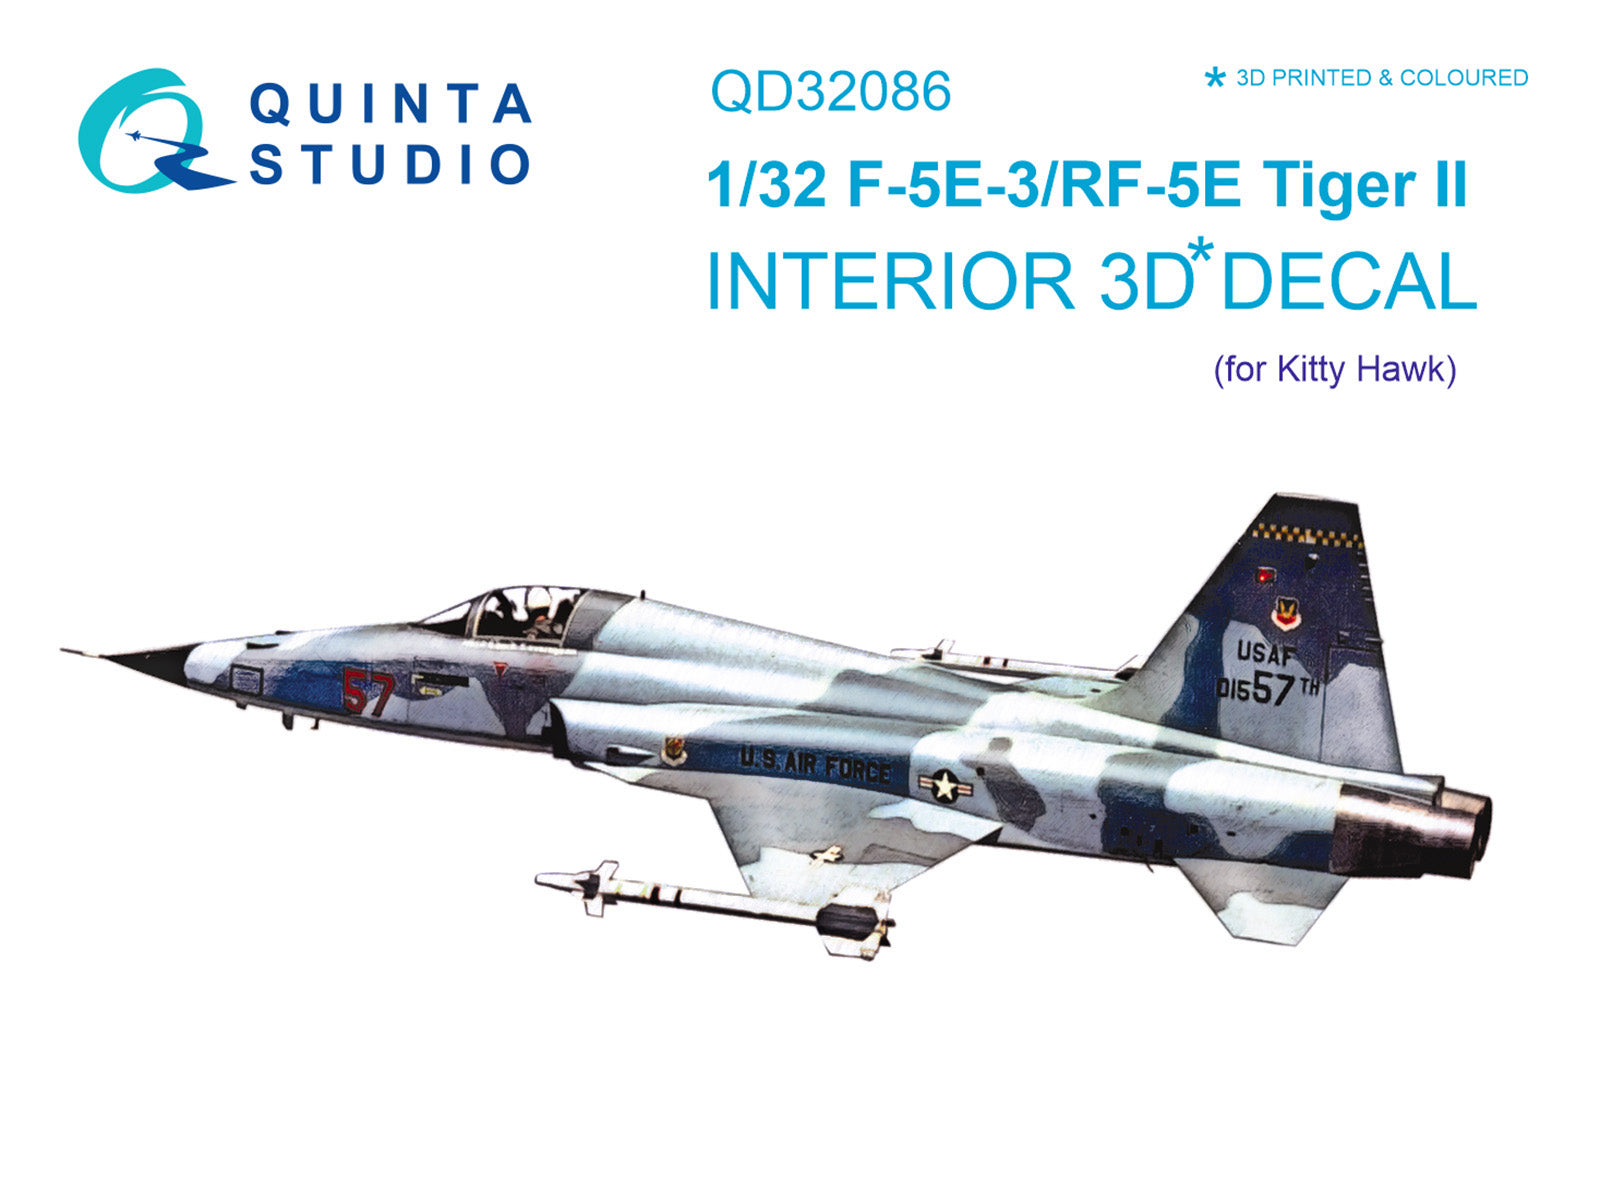 Quinta Studio - 1/32 F-5E-3/RF-5E - QD32086 for Kittyhawk kit